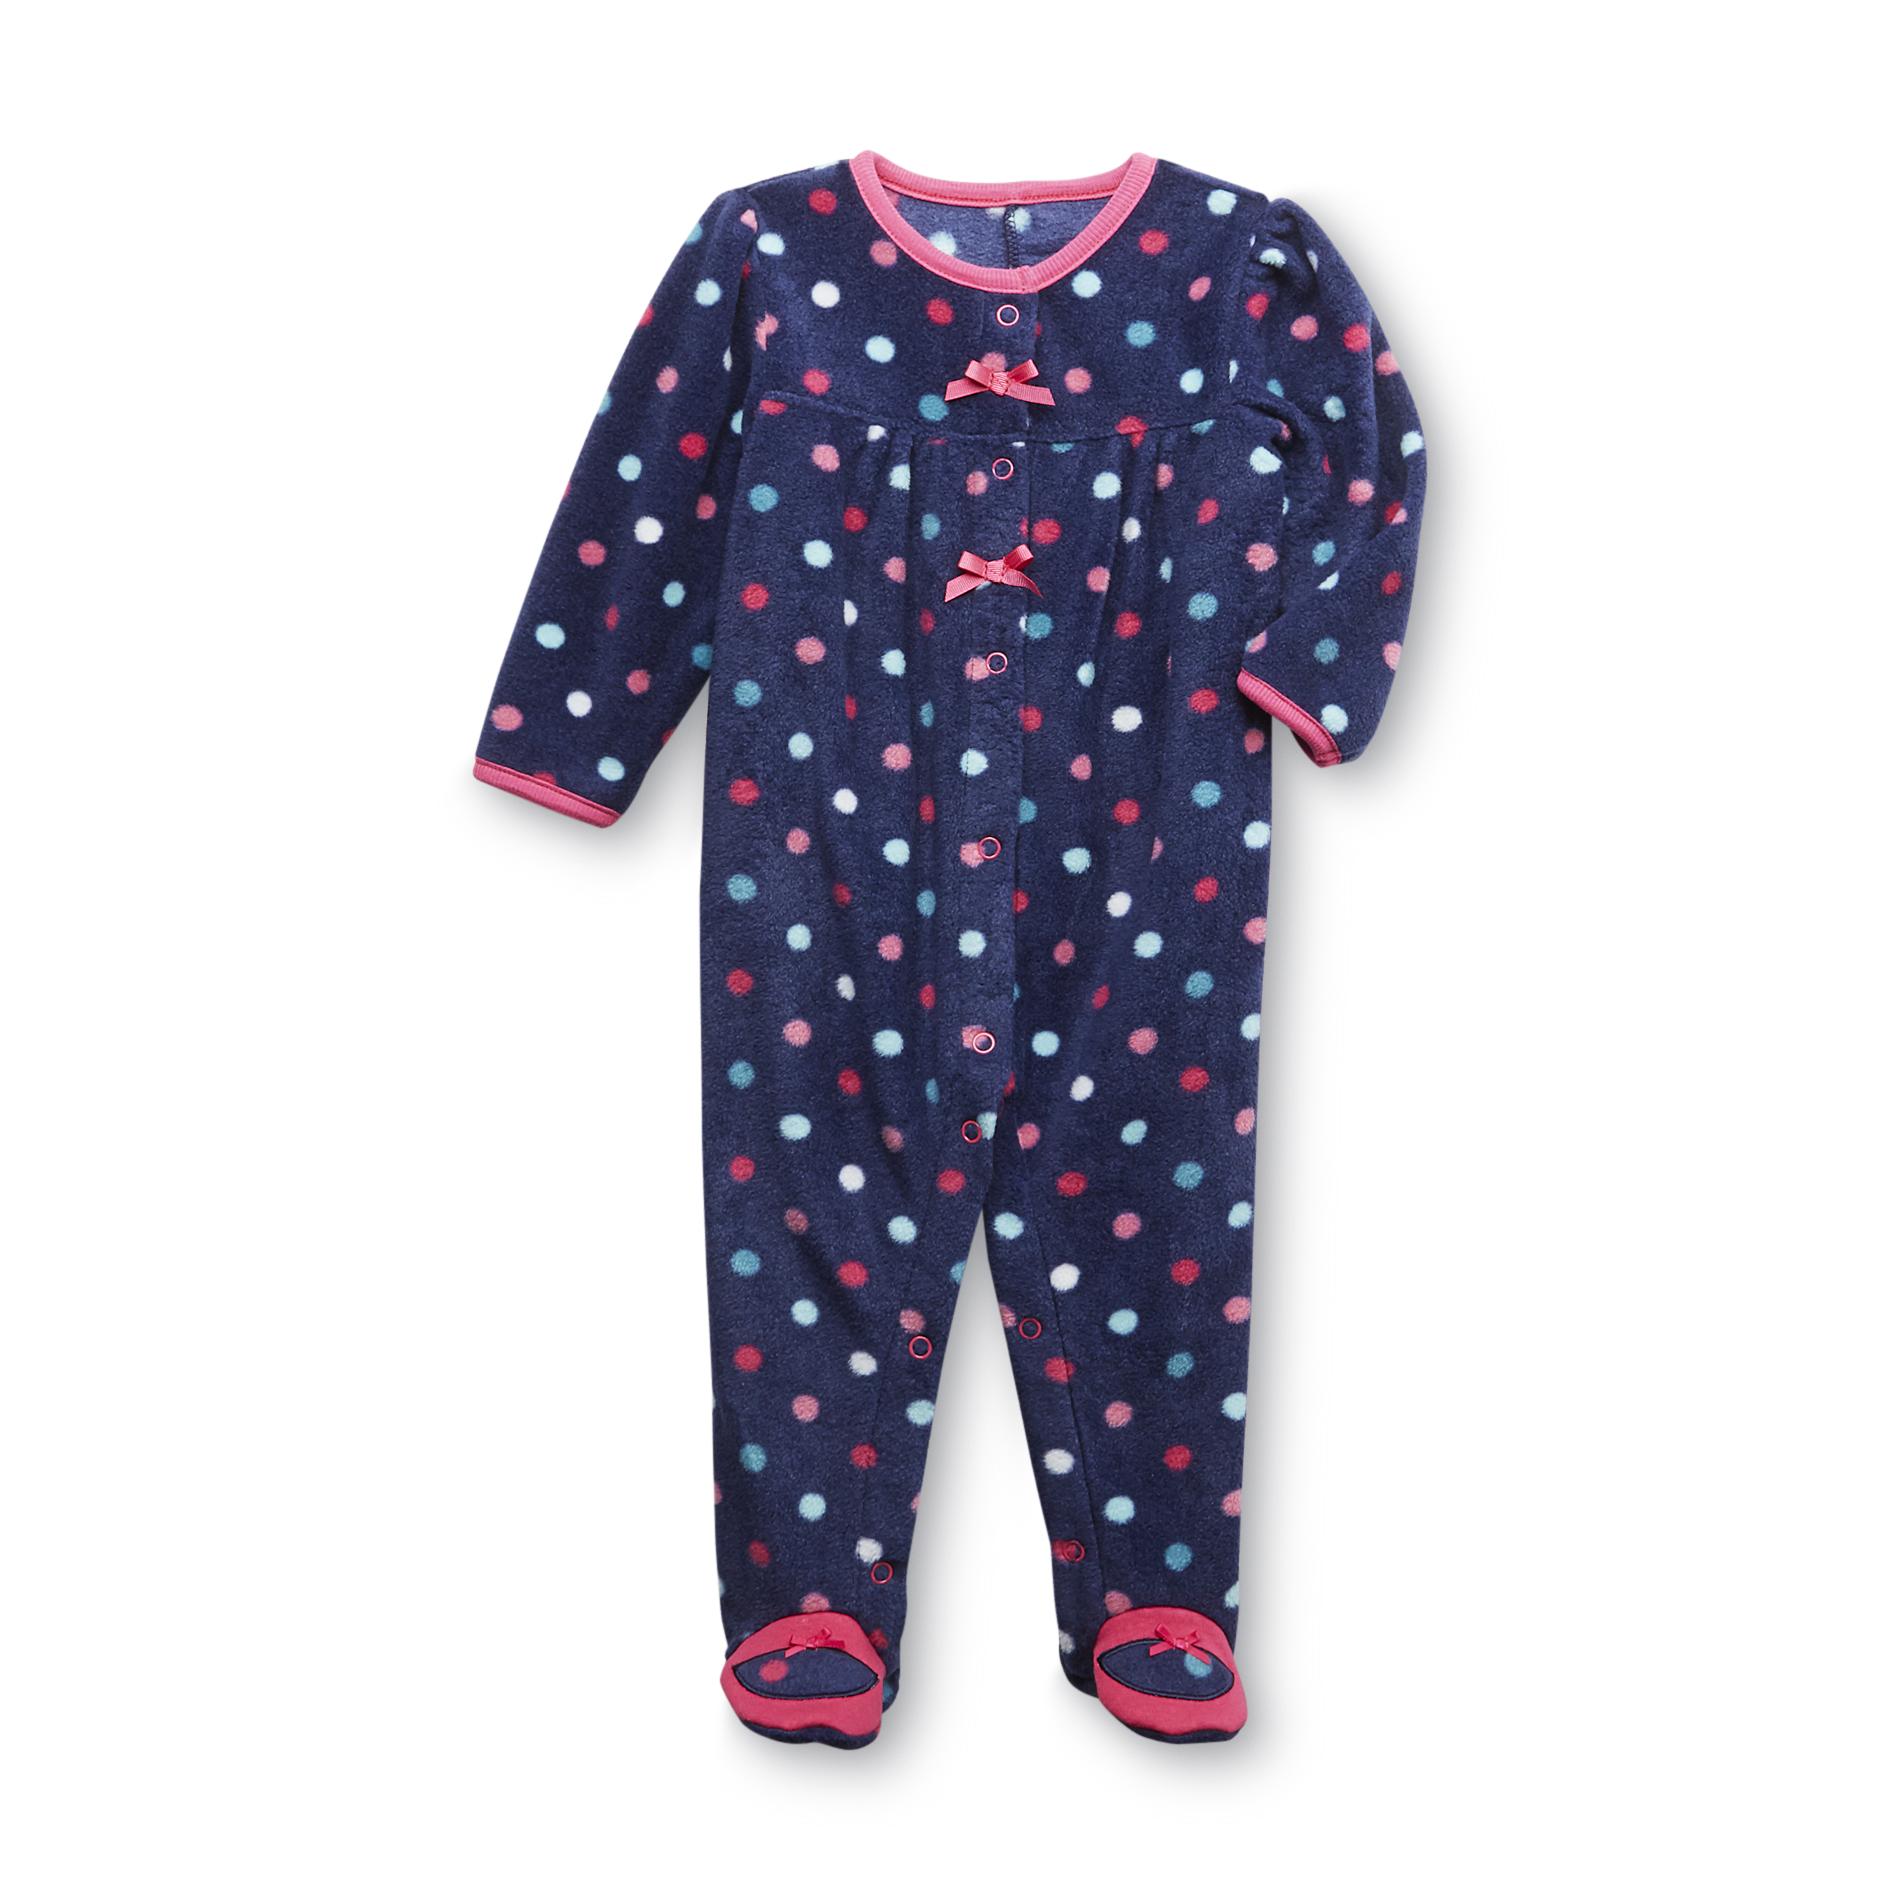 Little Wonders Newborn Girl's Footed Pajamas - Dots